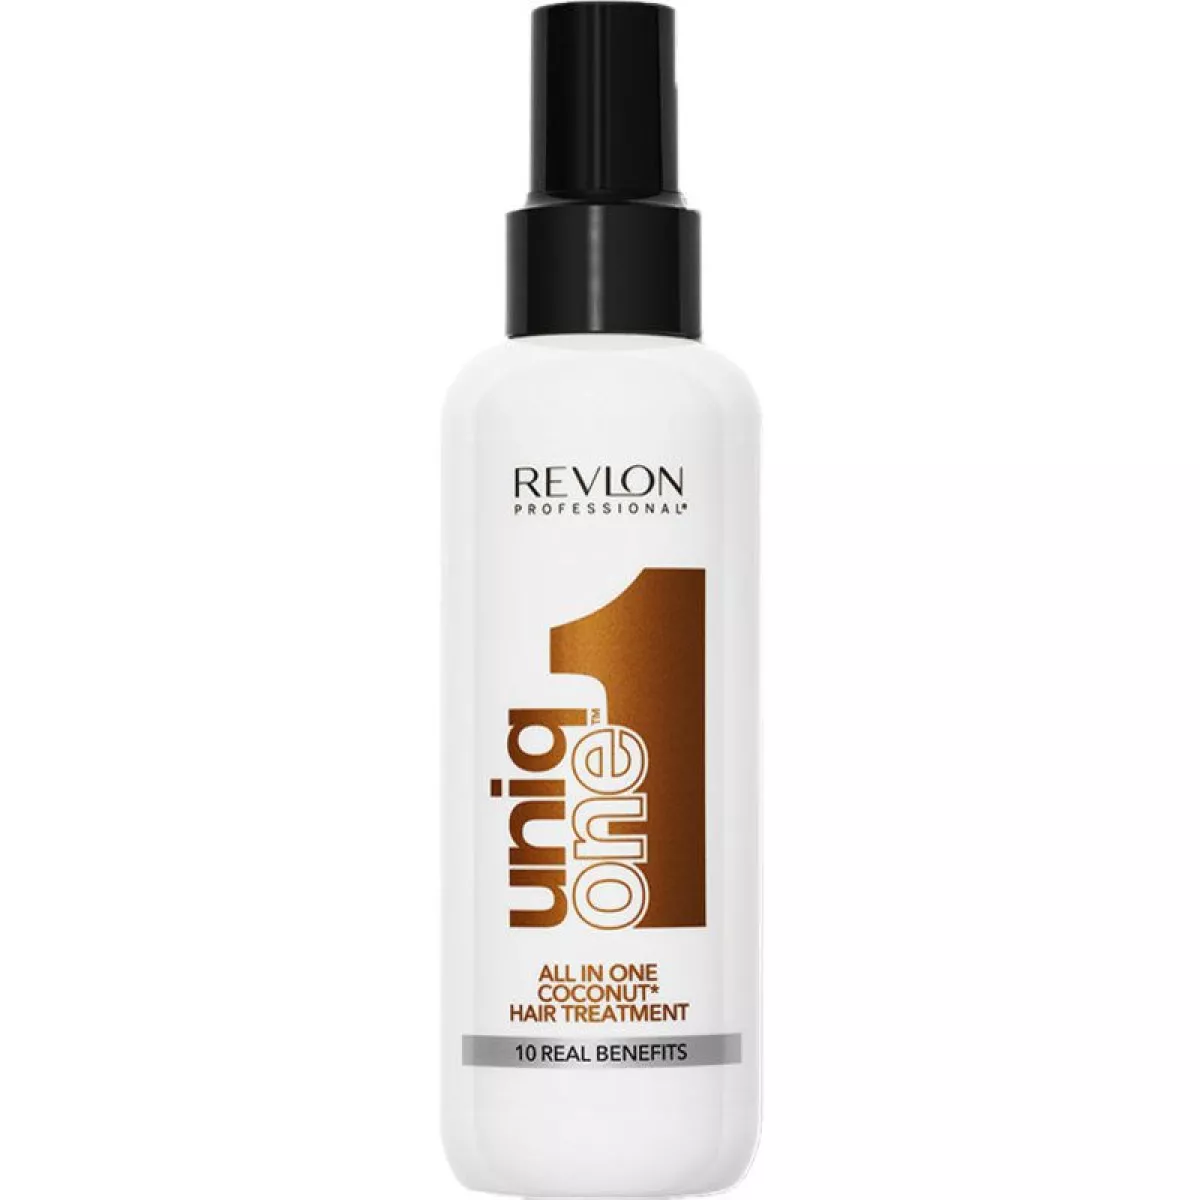 #3 - Revlon Uniq One All In One Hair Treatment 150 ml - Coconut